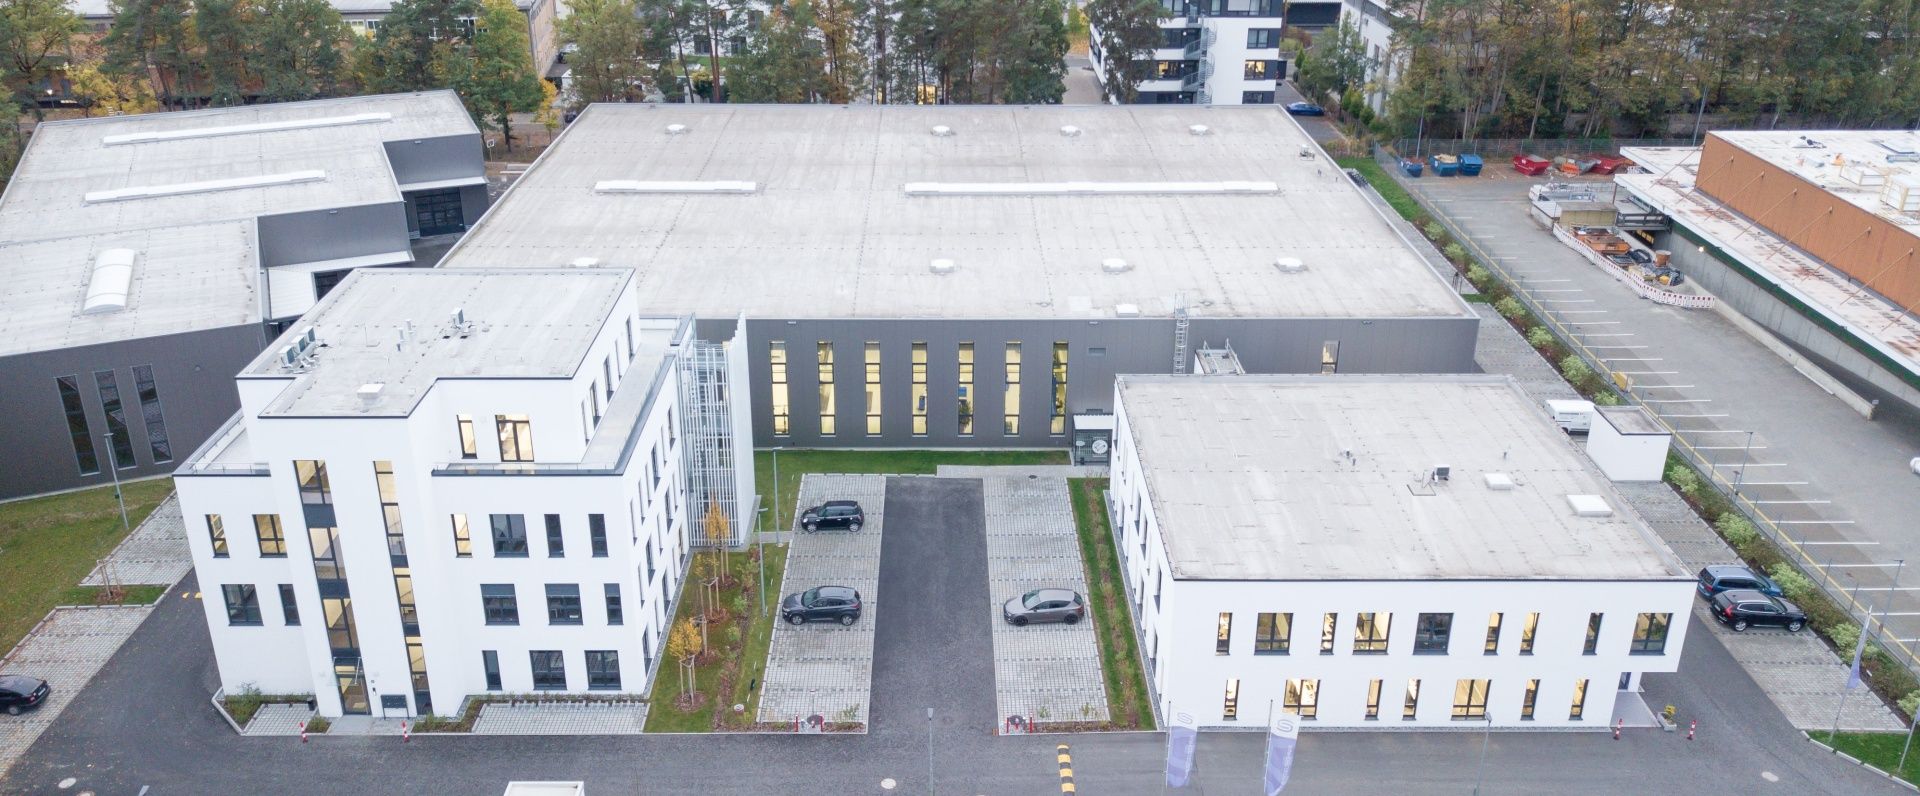 S+S Regeltechnik Entrance Обзор здания и территории компании